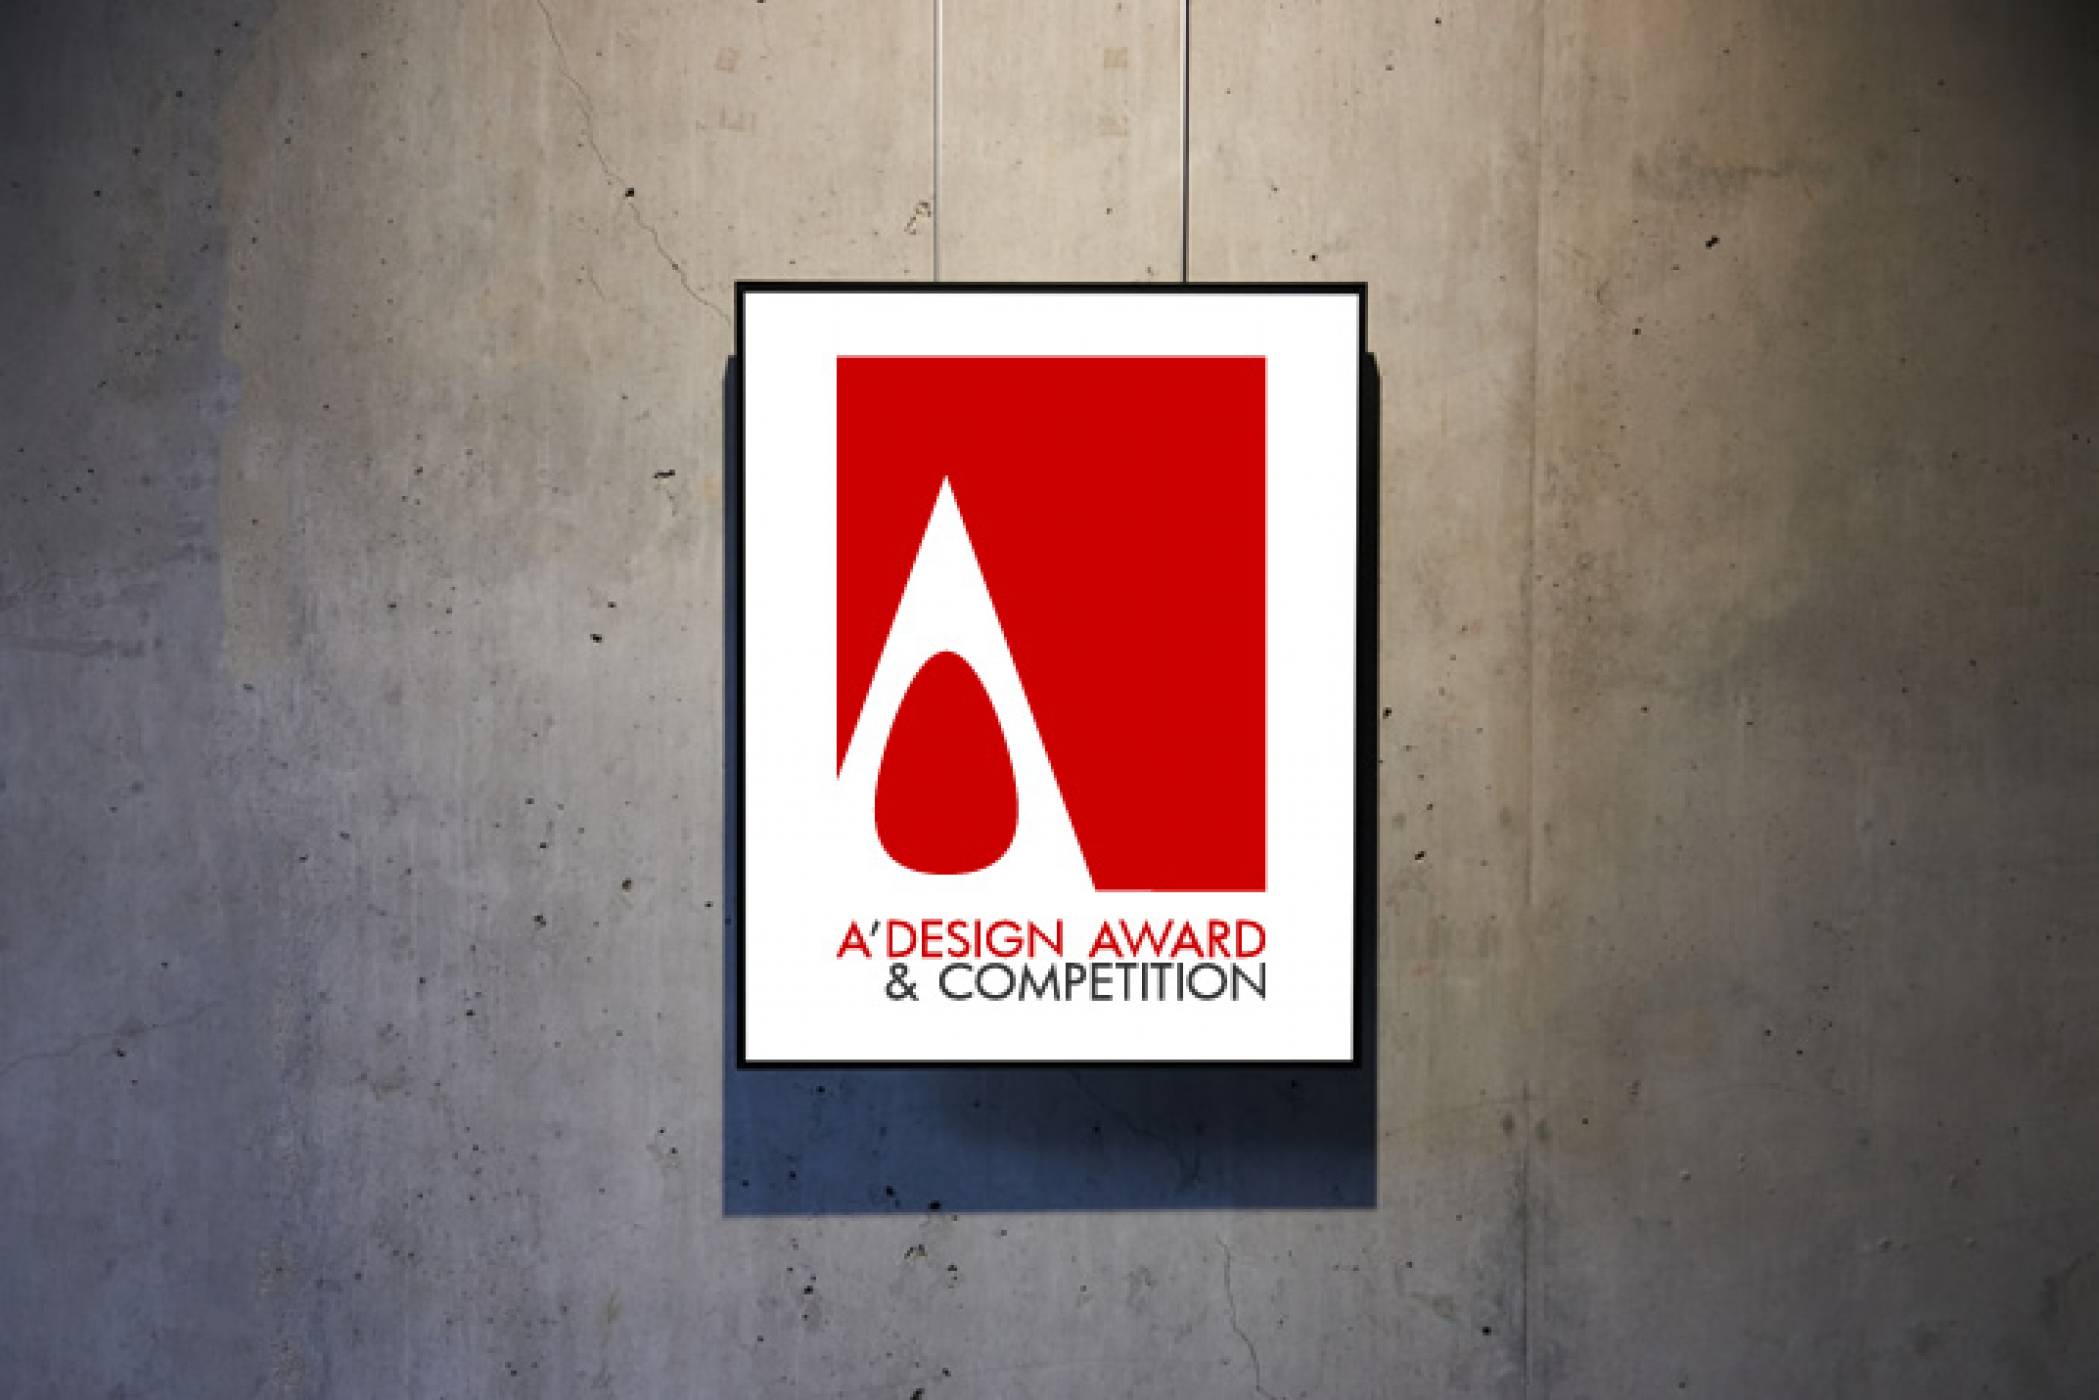 Competition award. А’Design Award. A' Design Award & Competition. Design Awards. A’Design Award & Competition логотип.